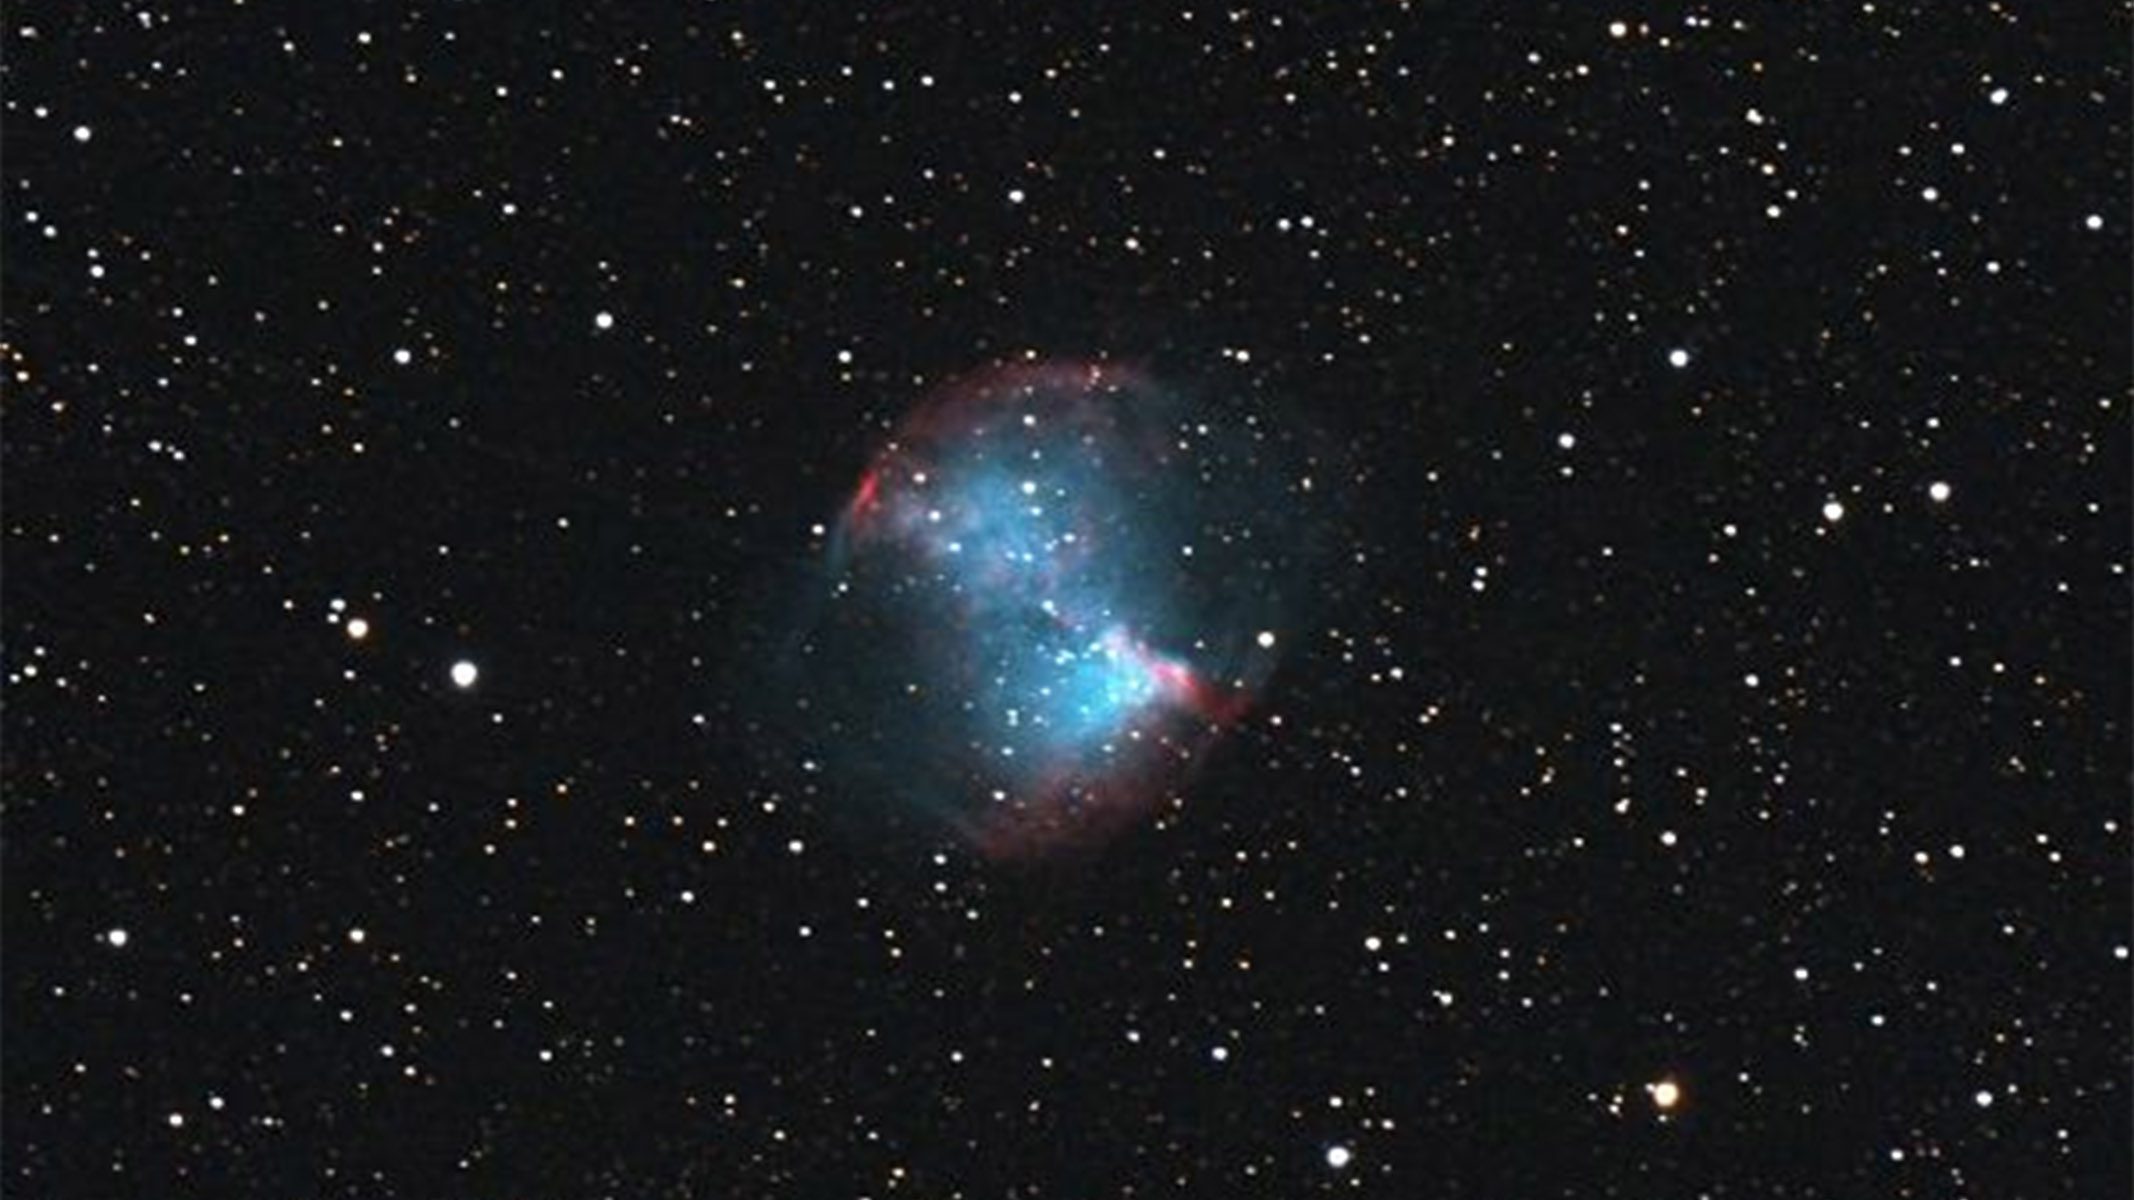 A deep sky object captured by the Celestron Advanced Telescope